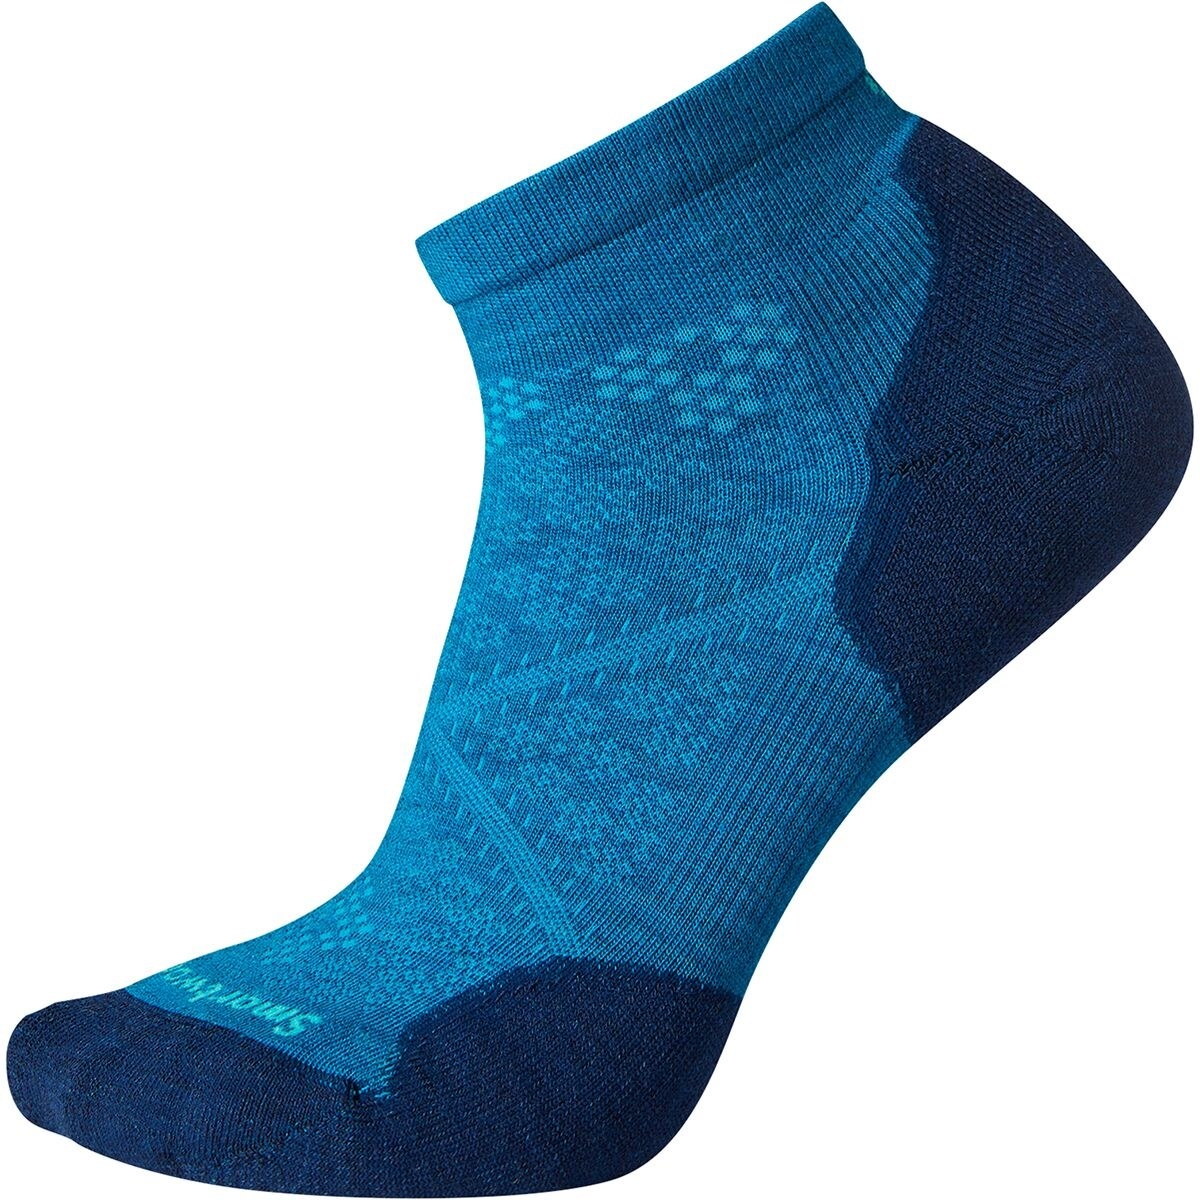 The blue Smartwool sock